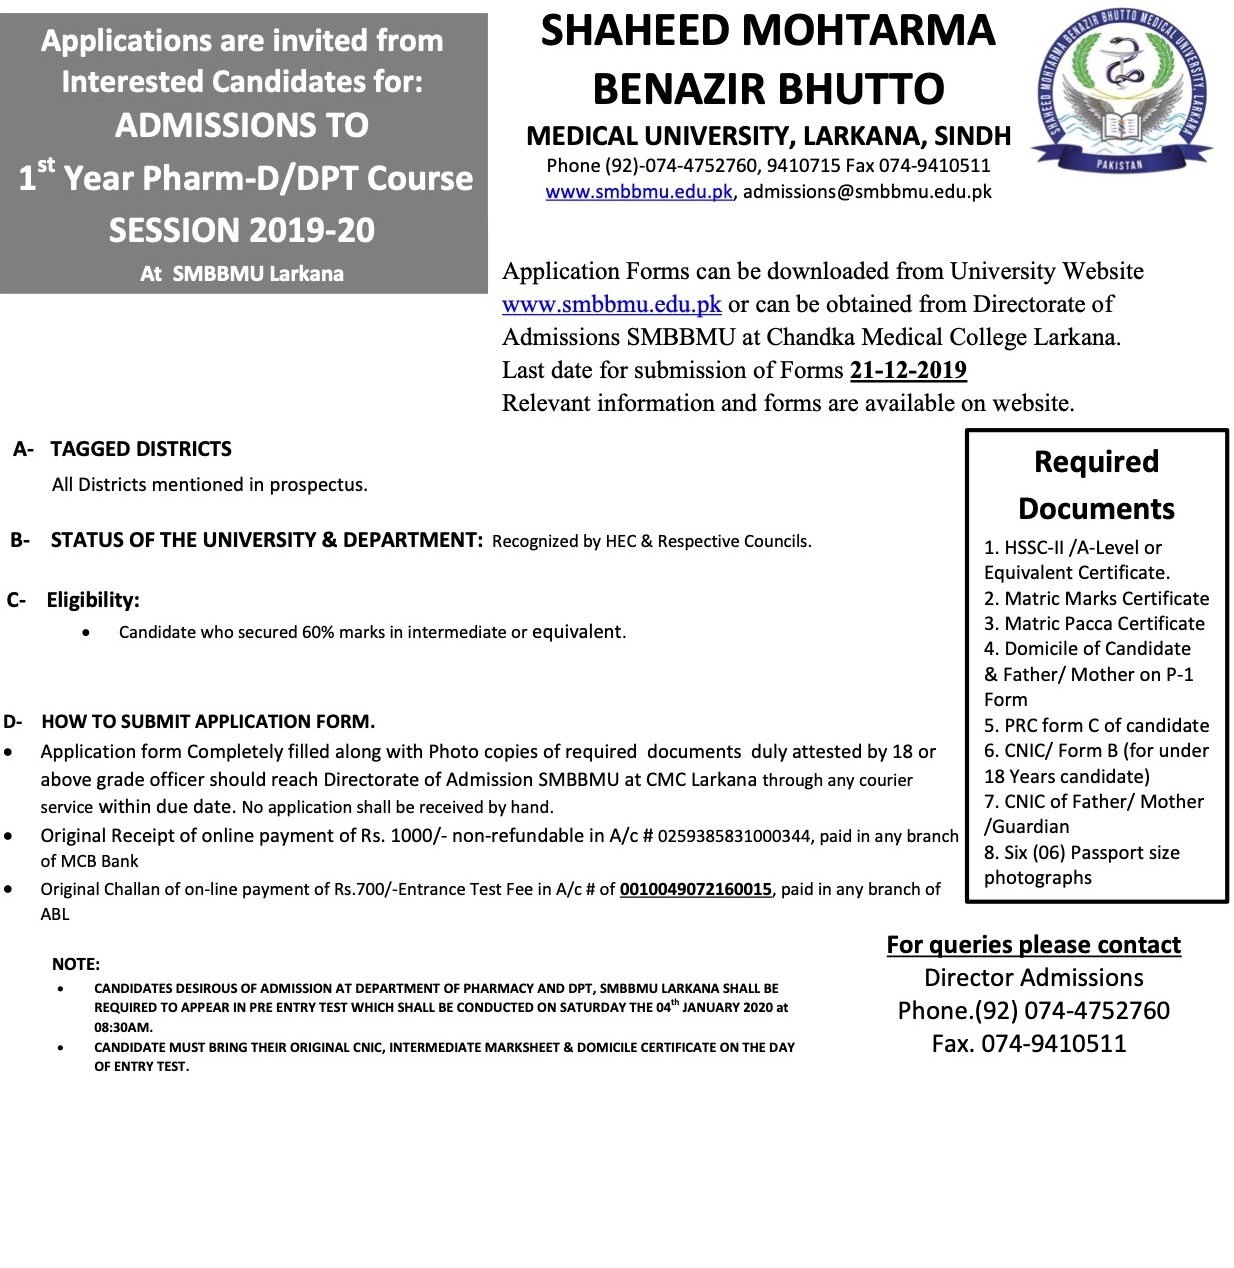 SMBBMU-Larkana, Admission for Pharm-D Courses Session 2019-20